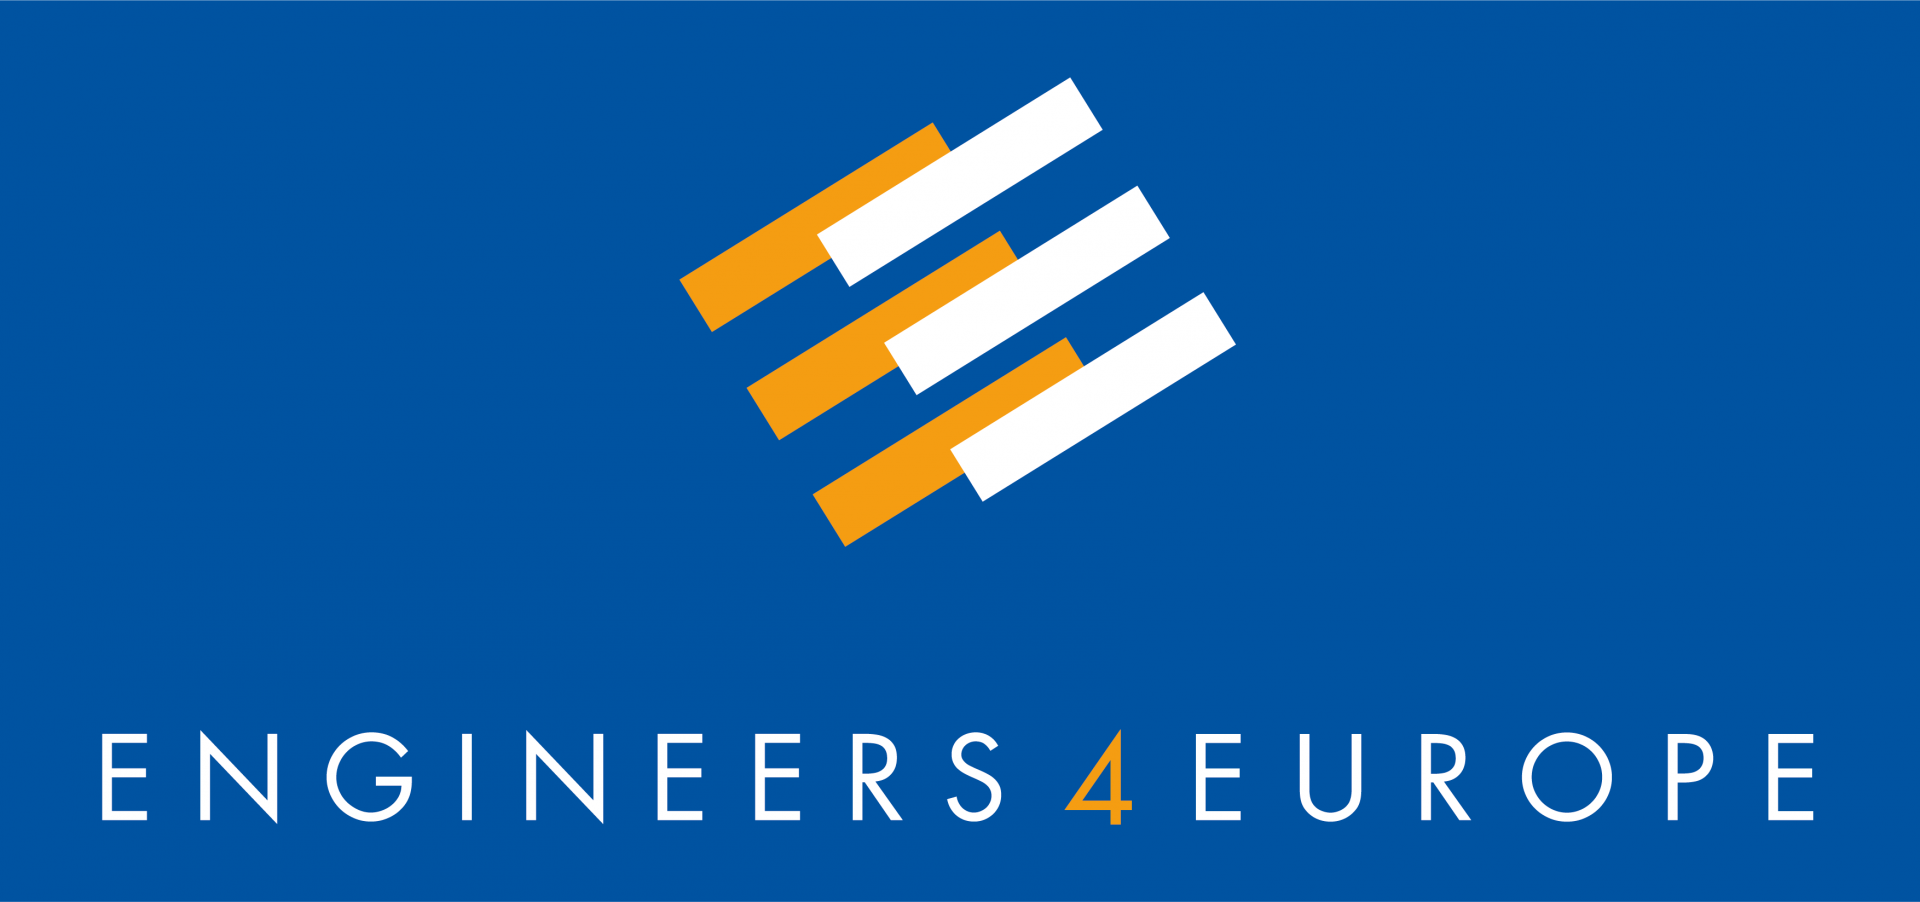 International survey of the European Engineering Federation ENGINEERS EUROPE